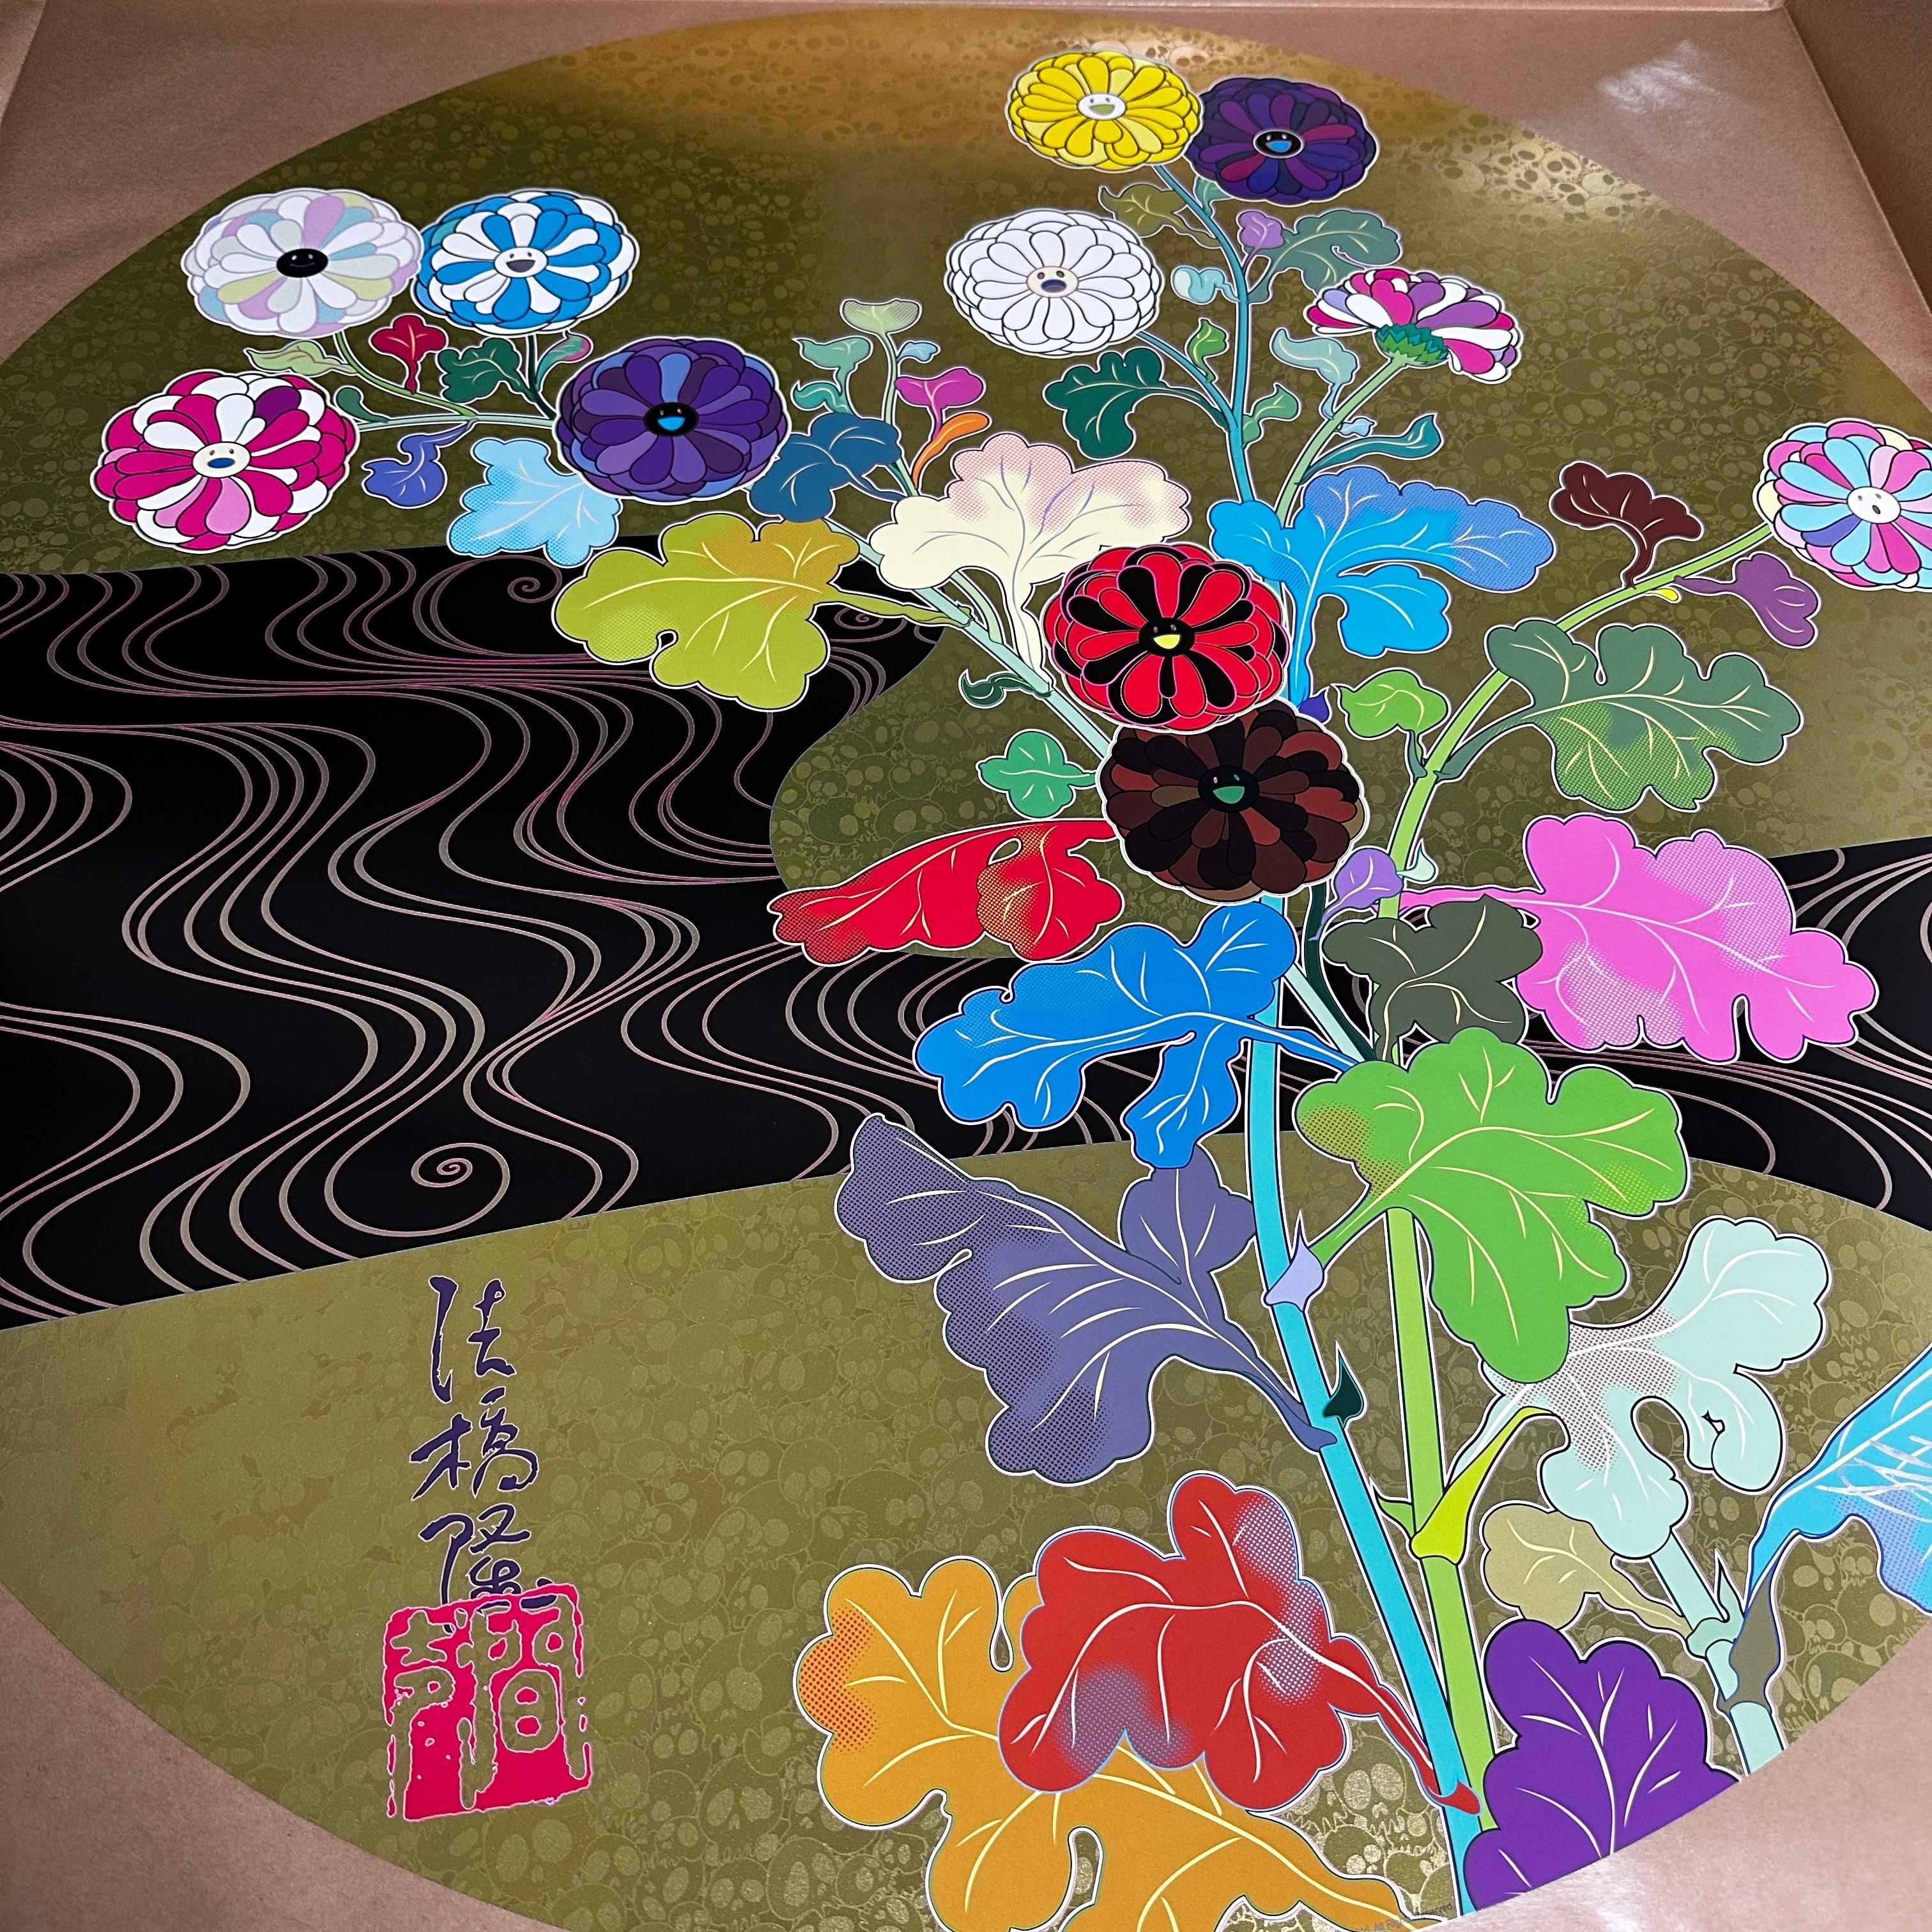 Korin: The Golden River (Japan, Takashi Murakami, Tokyo, Flowers) For Sale 6